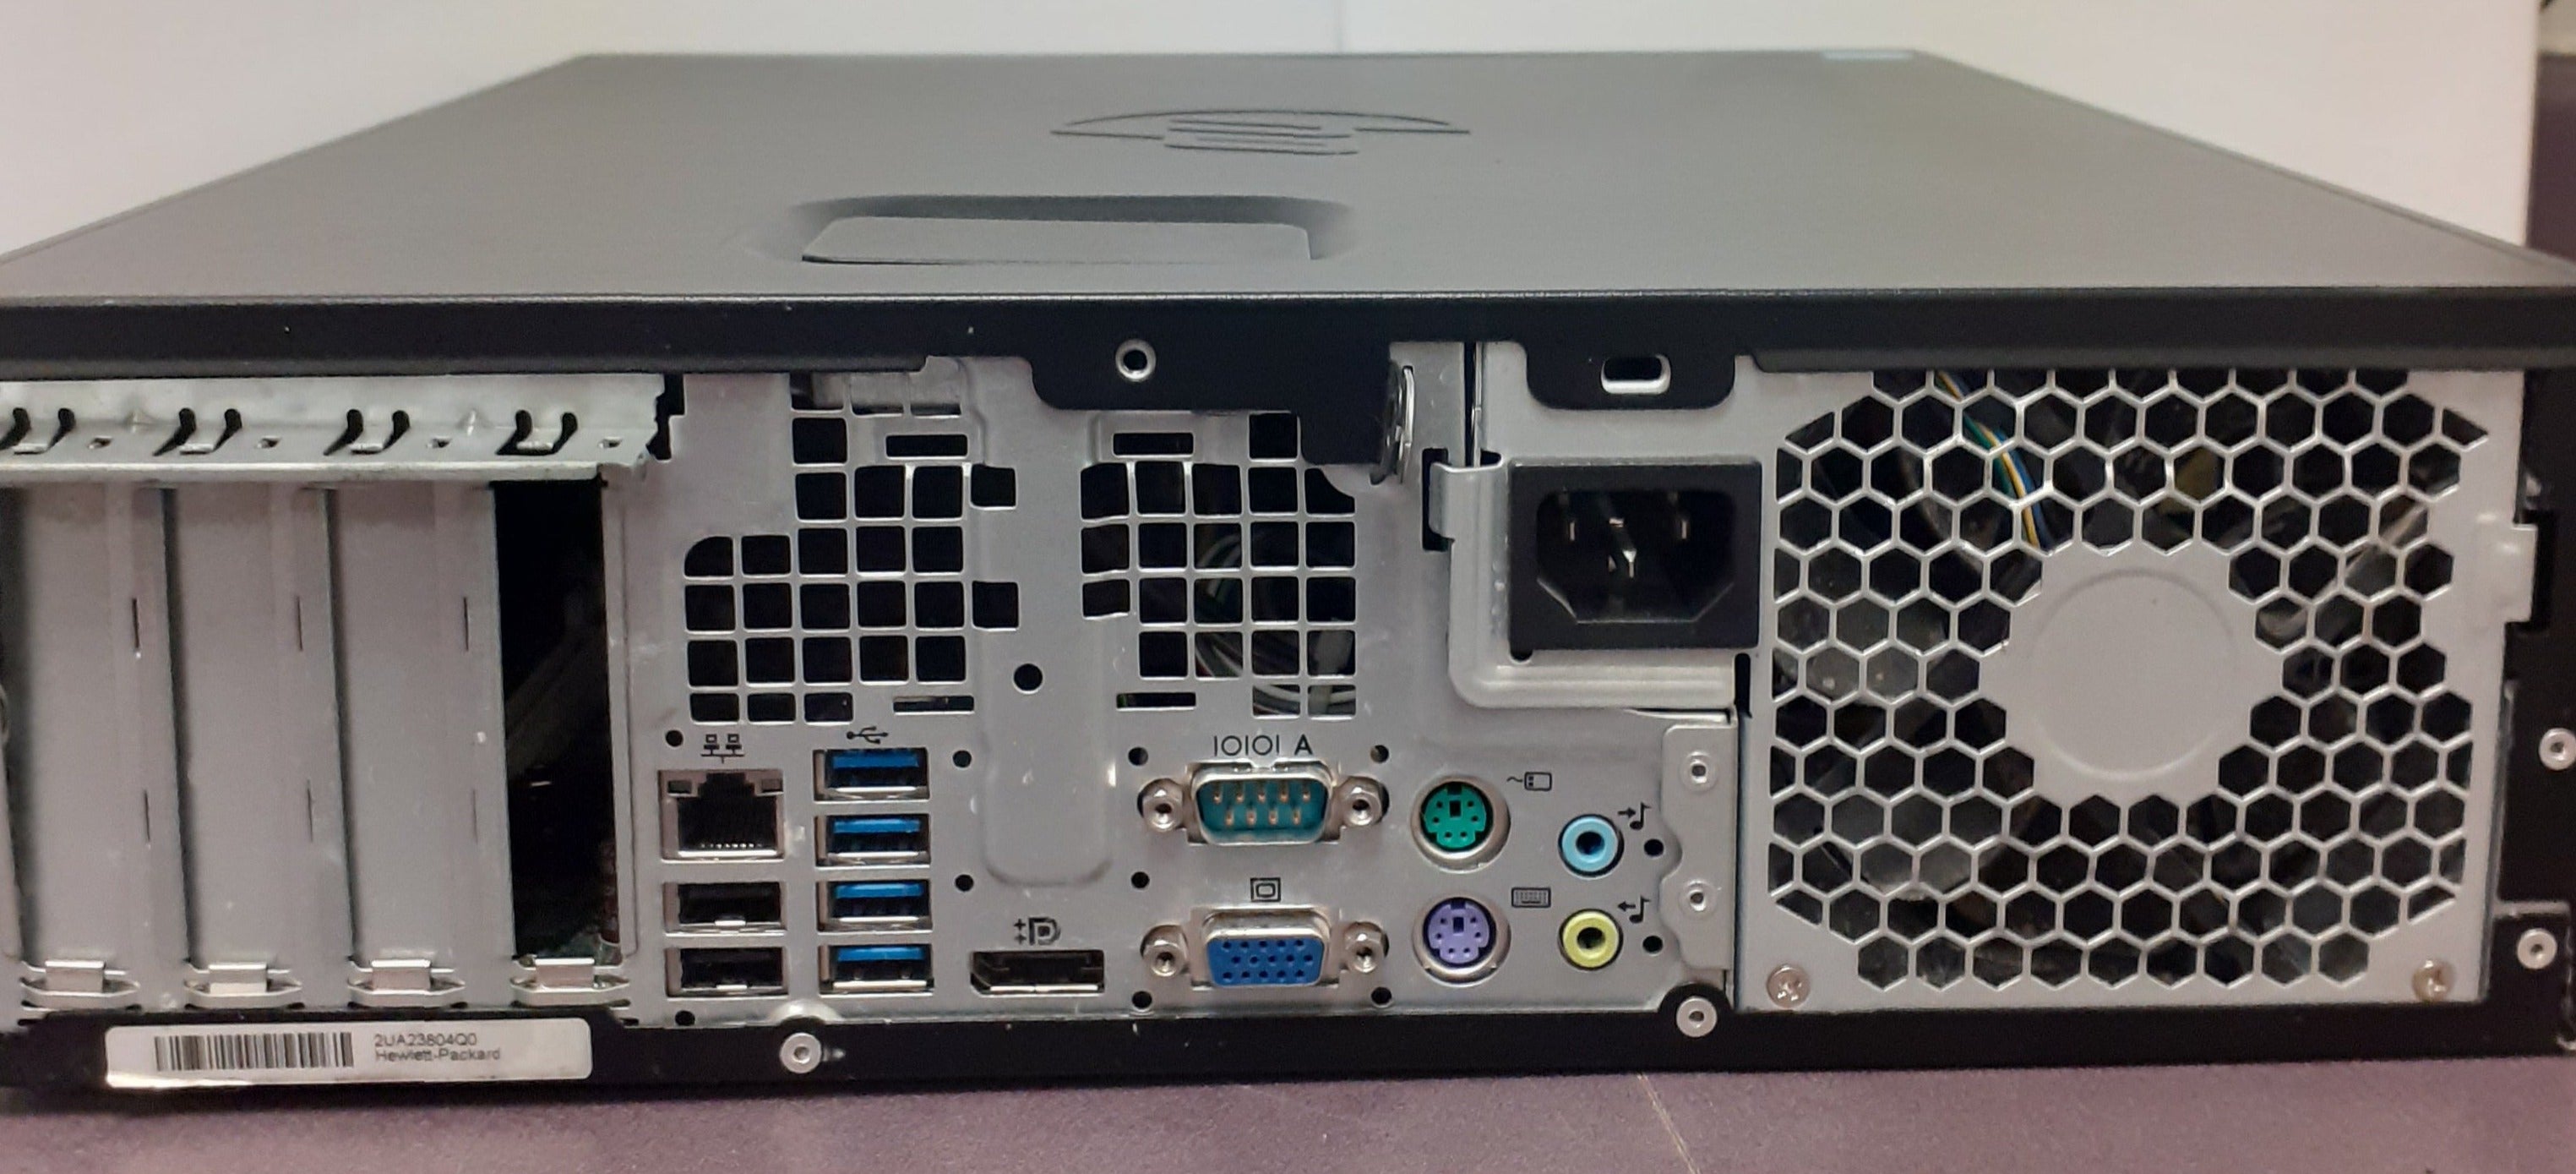 Refurbished PC - HP Intel Core i5